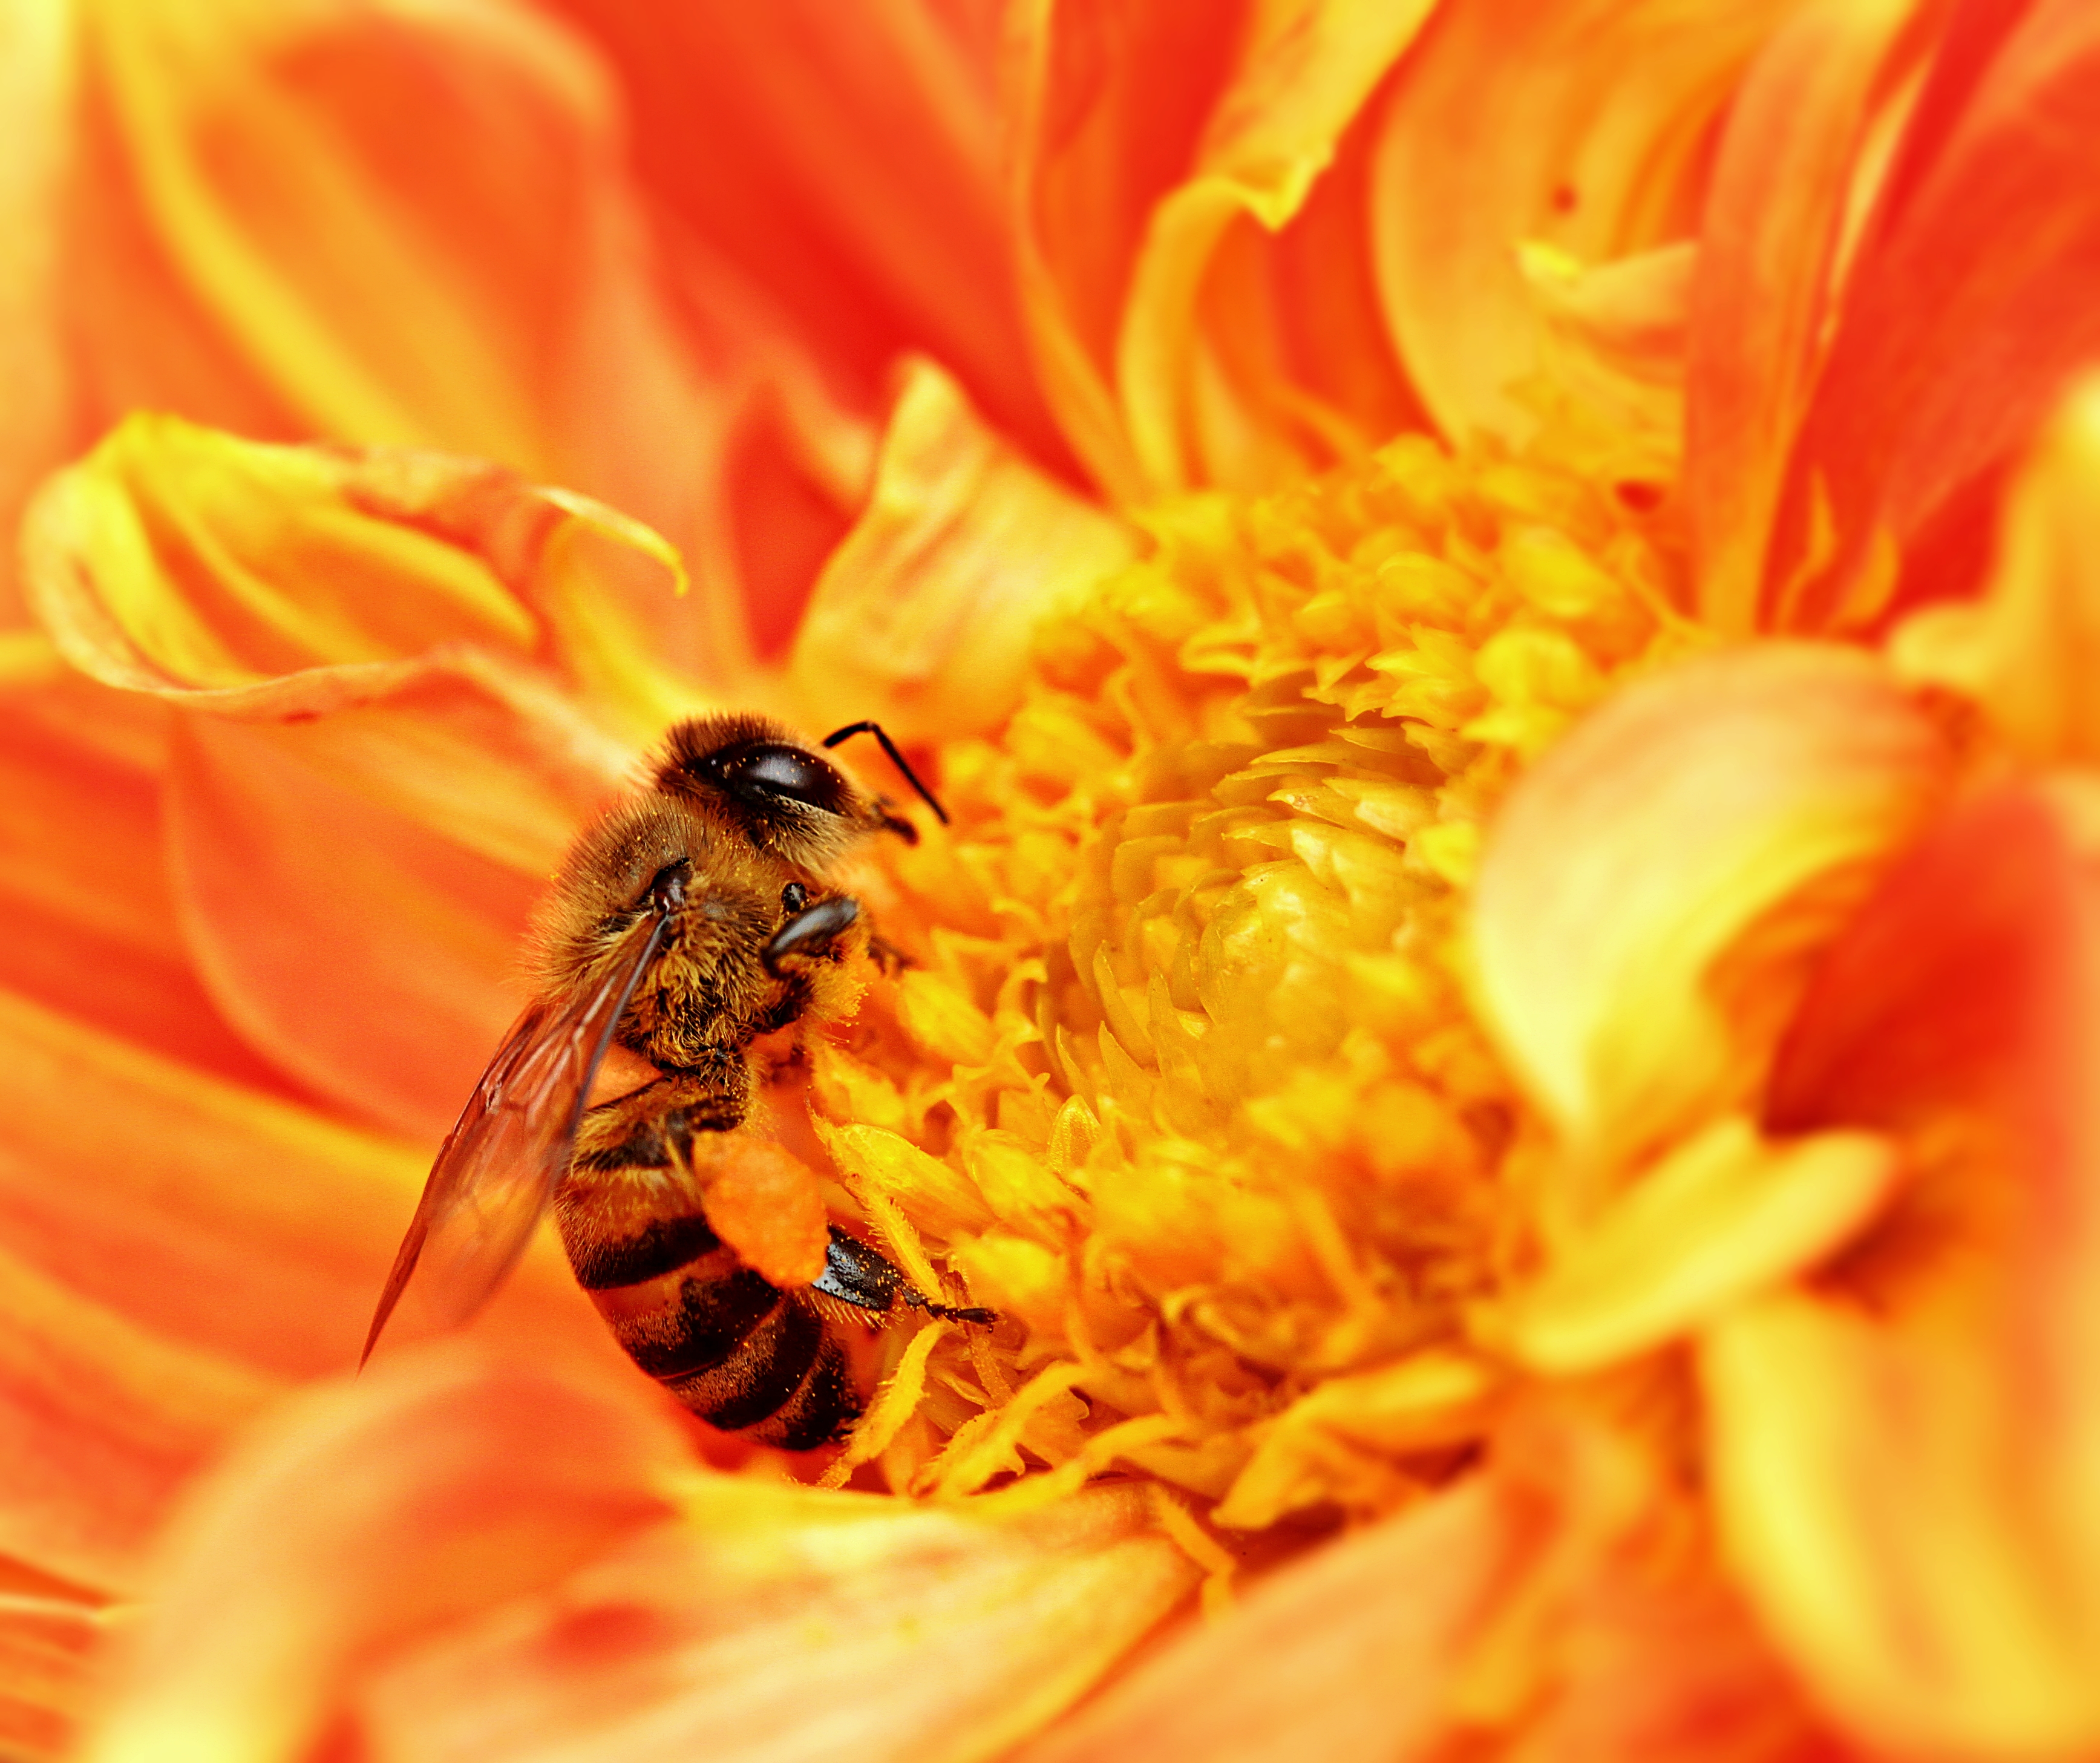 file-honey-bee-takes-nectar-jpg-wikipedia